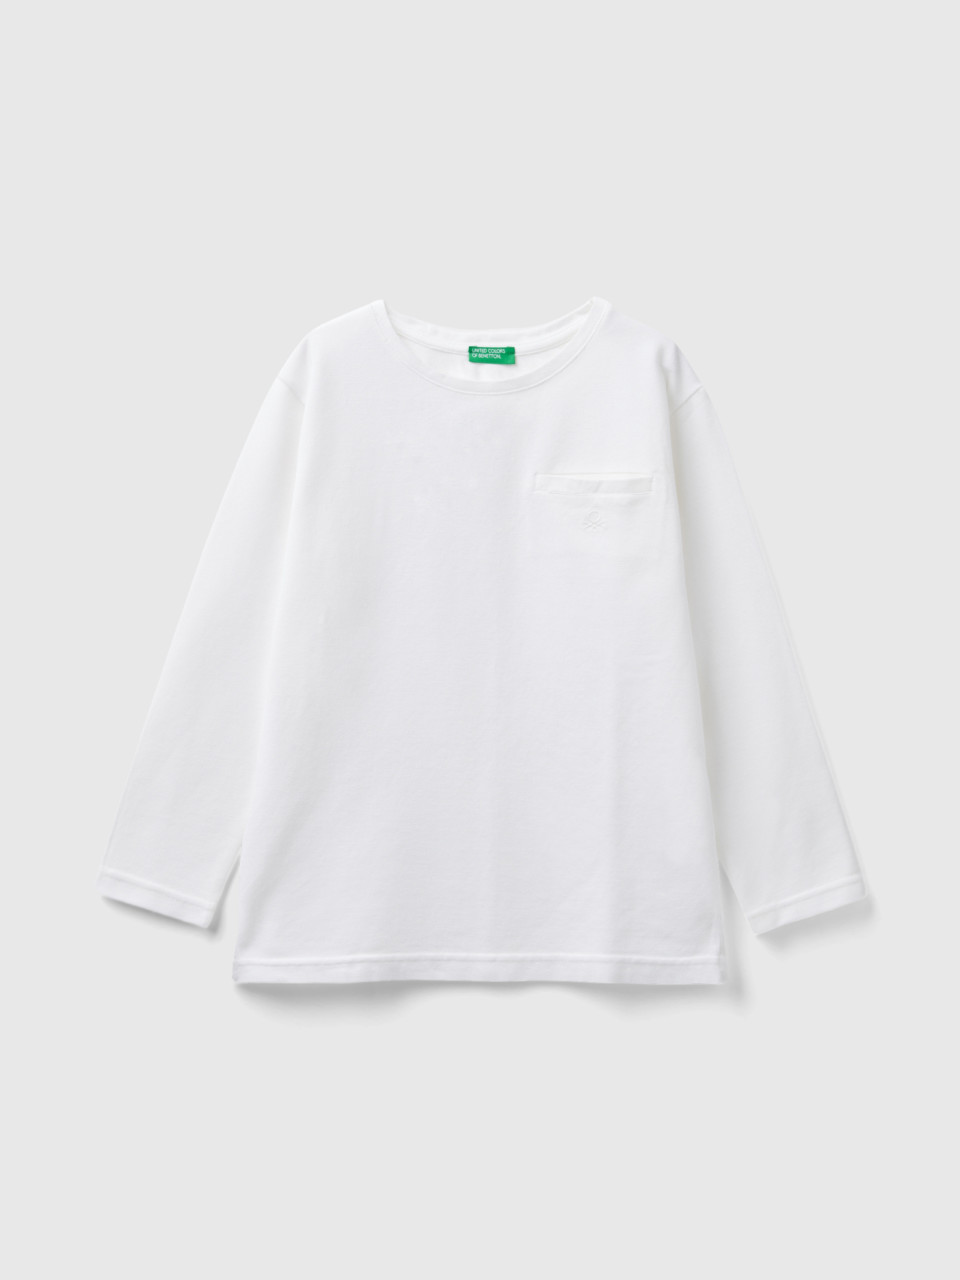 Benetton, T-shirt With Pique Pocket, White, Kids